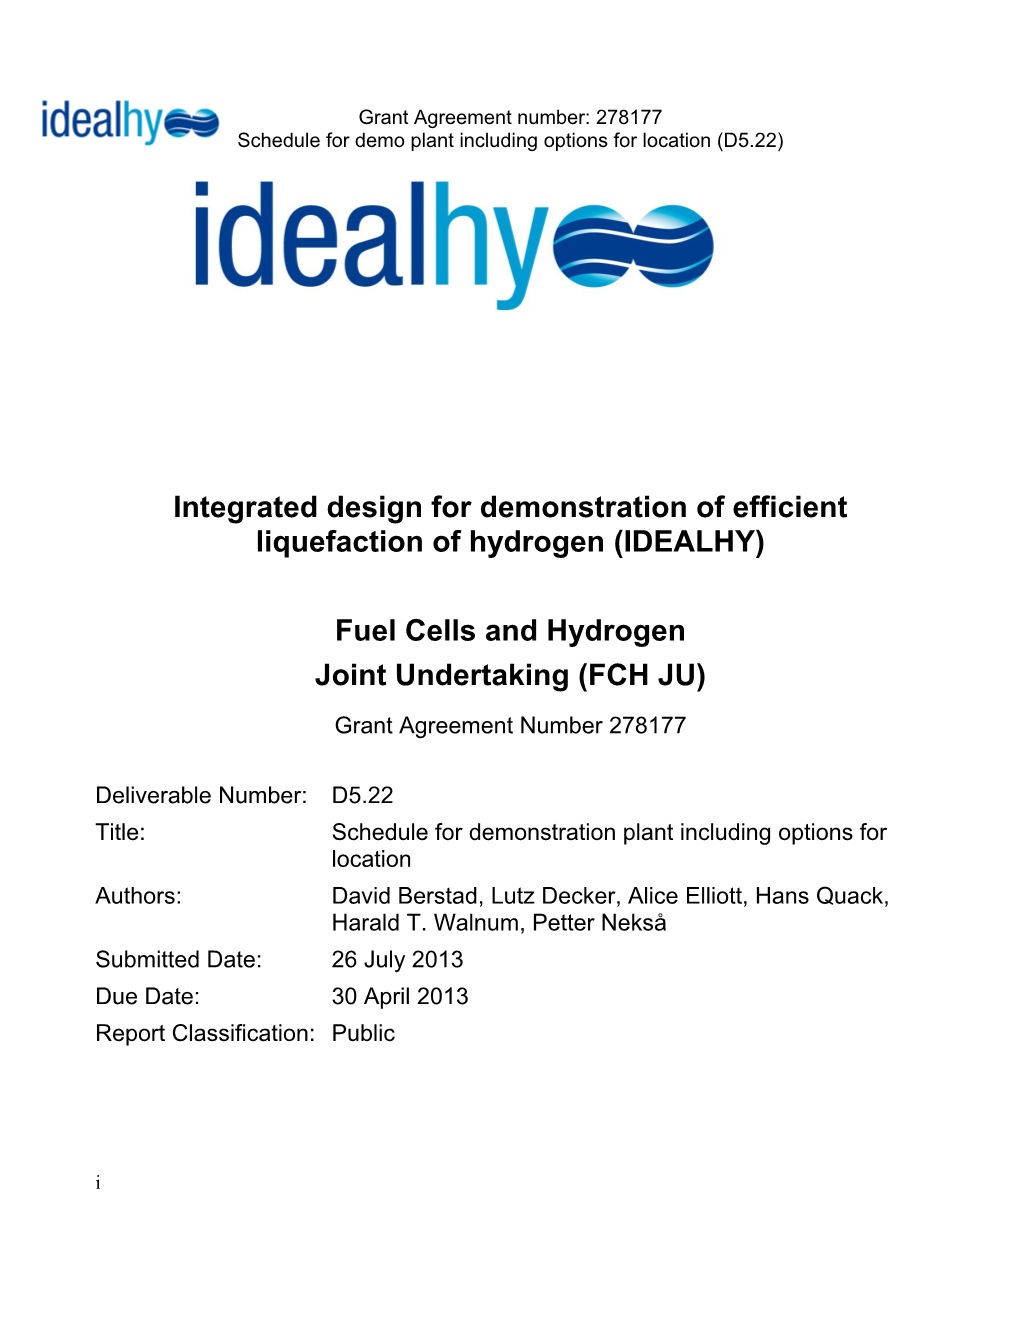 Integrated Design for Demonstration of Efficient Liquefaction of Hydrogen (IDEALHY)